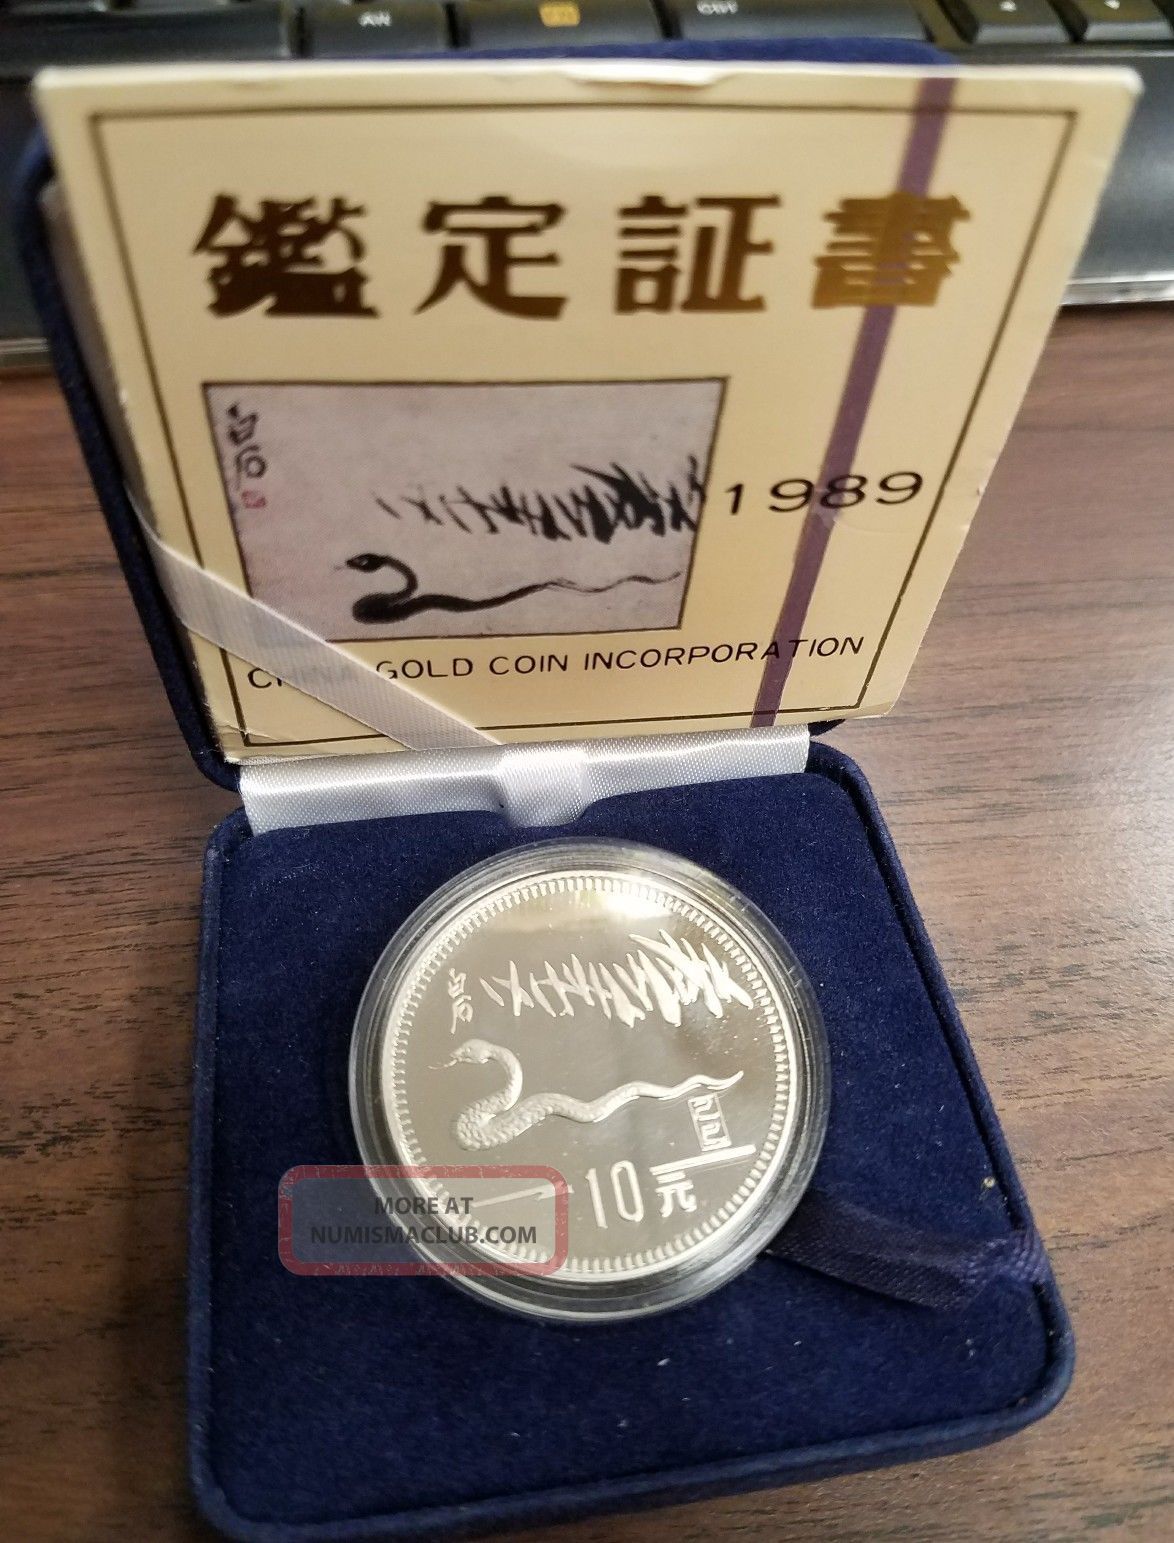 1989 China Gold Coin Inc.  10 Yuan Proof Silver Snake White Marks China photo